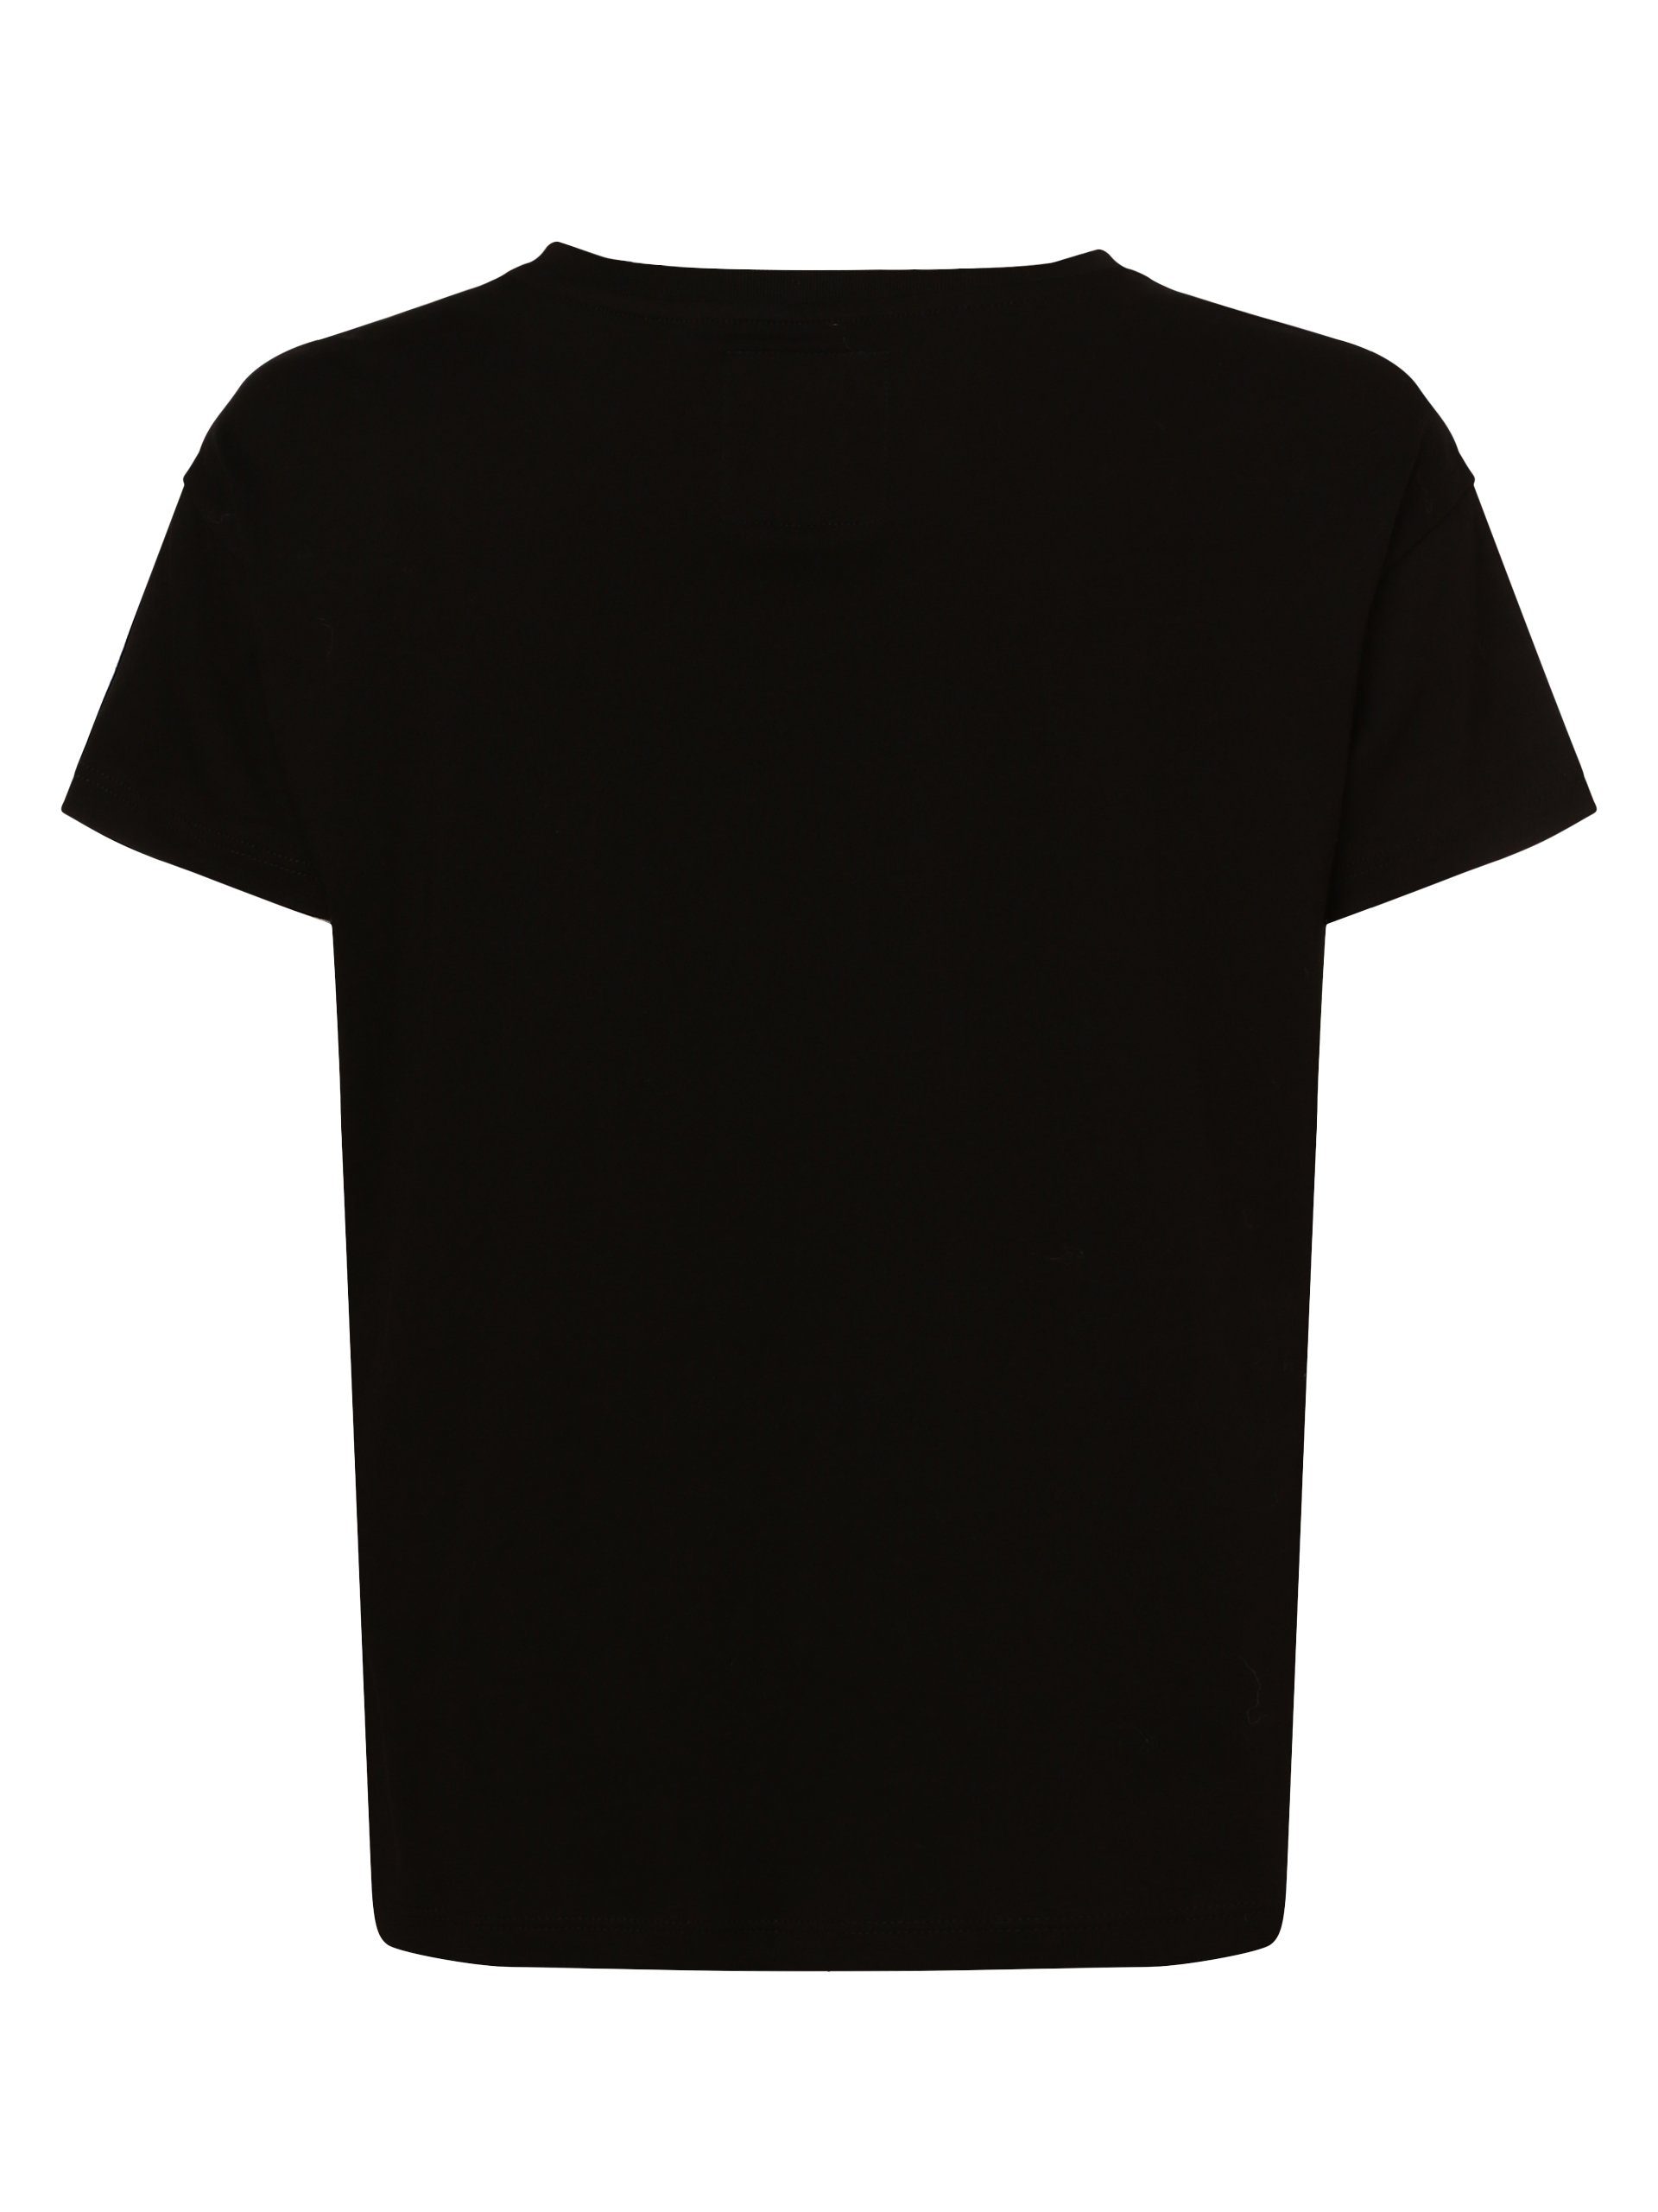 Exchange Armani Connected schwarz T-Shirt